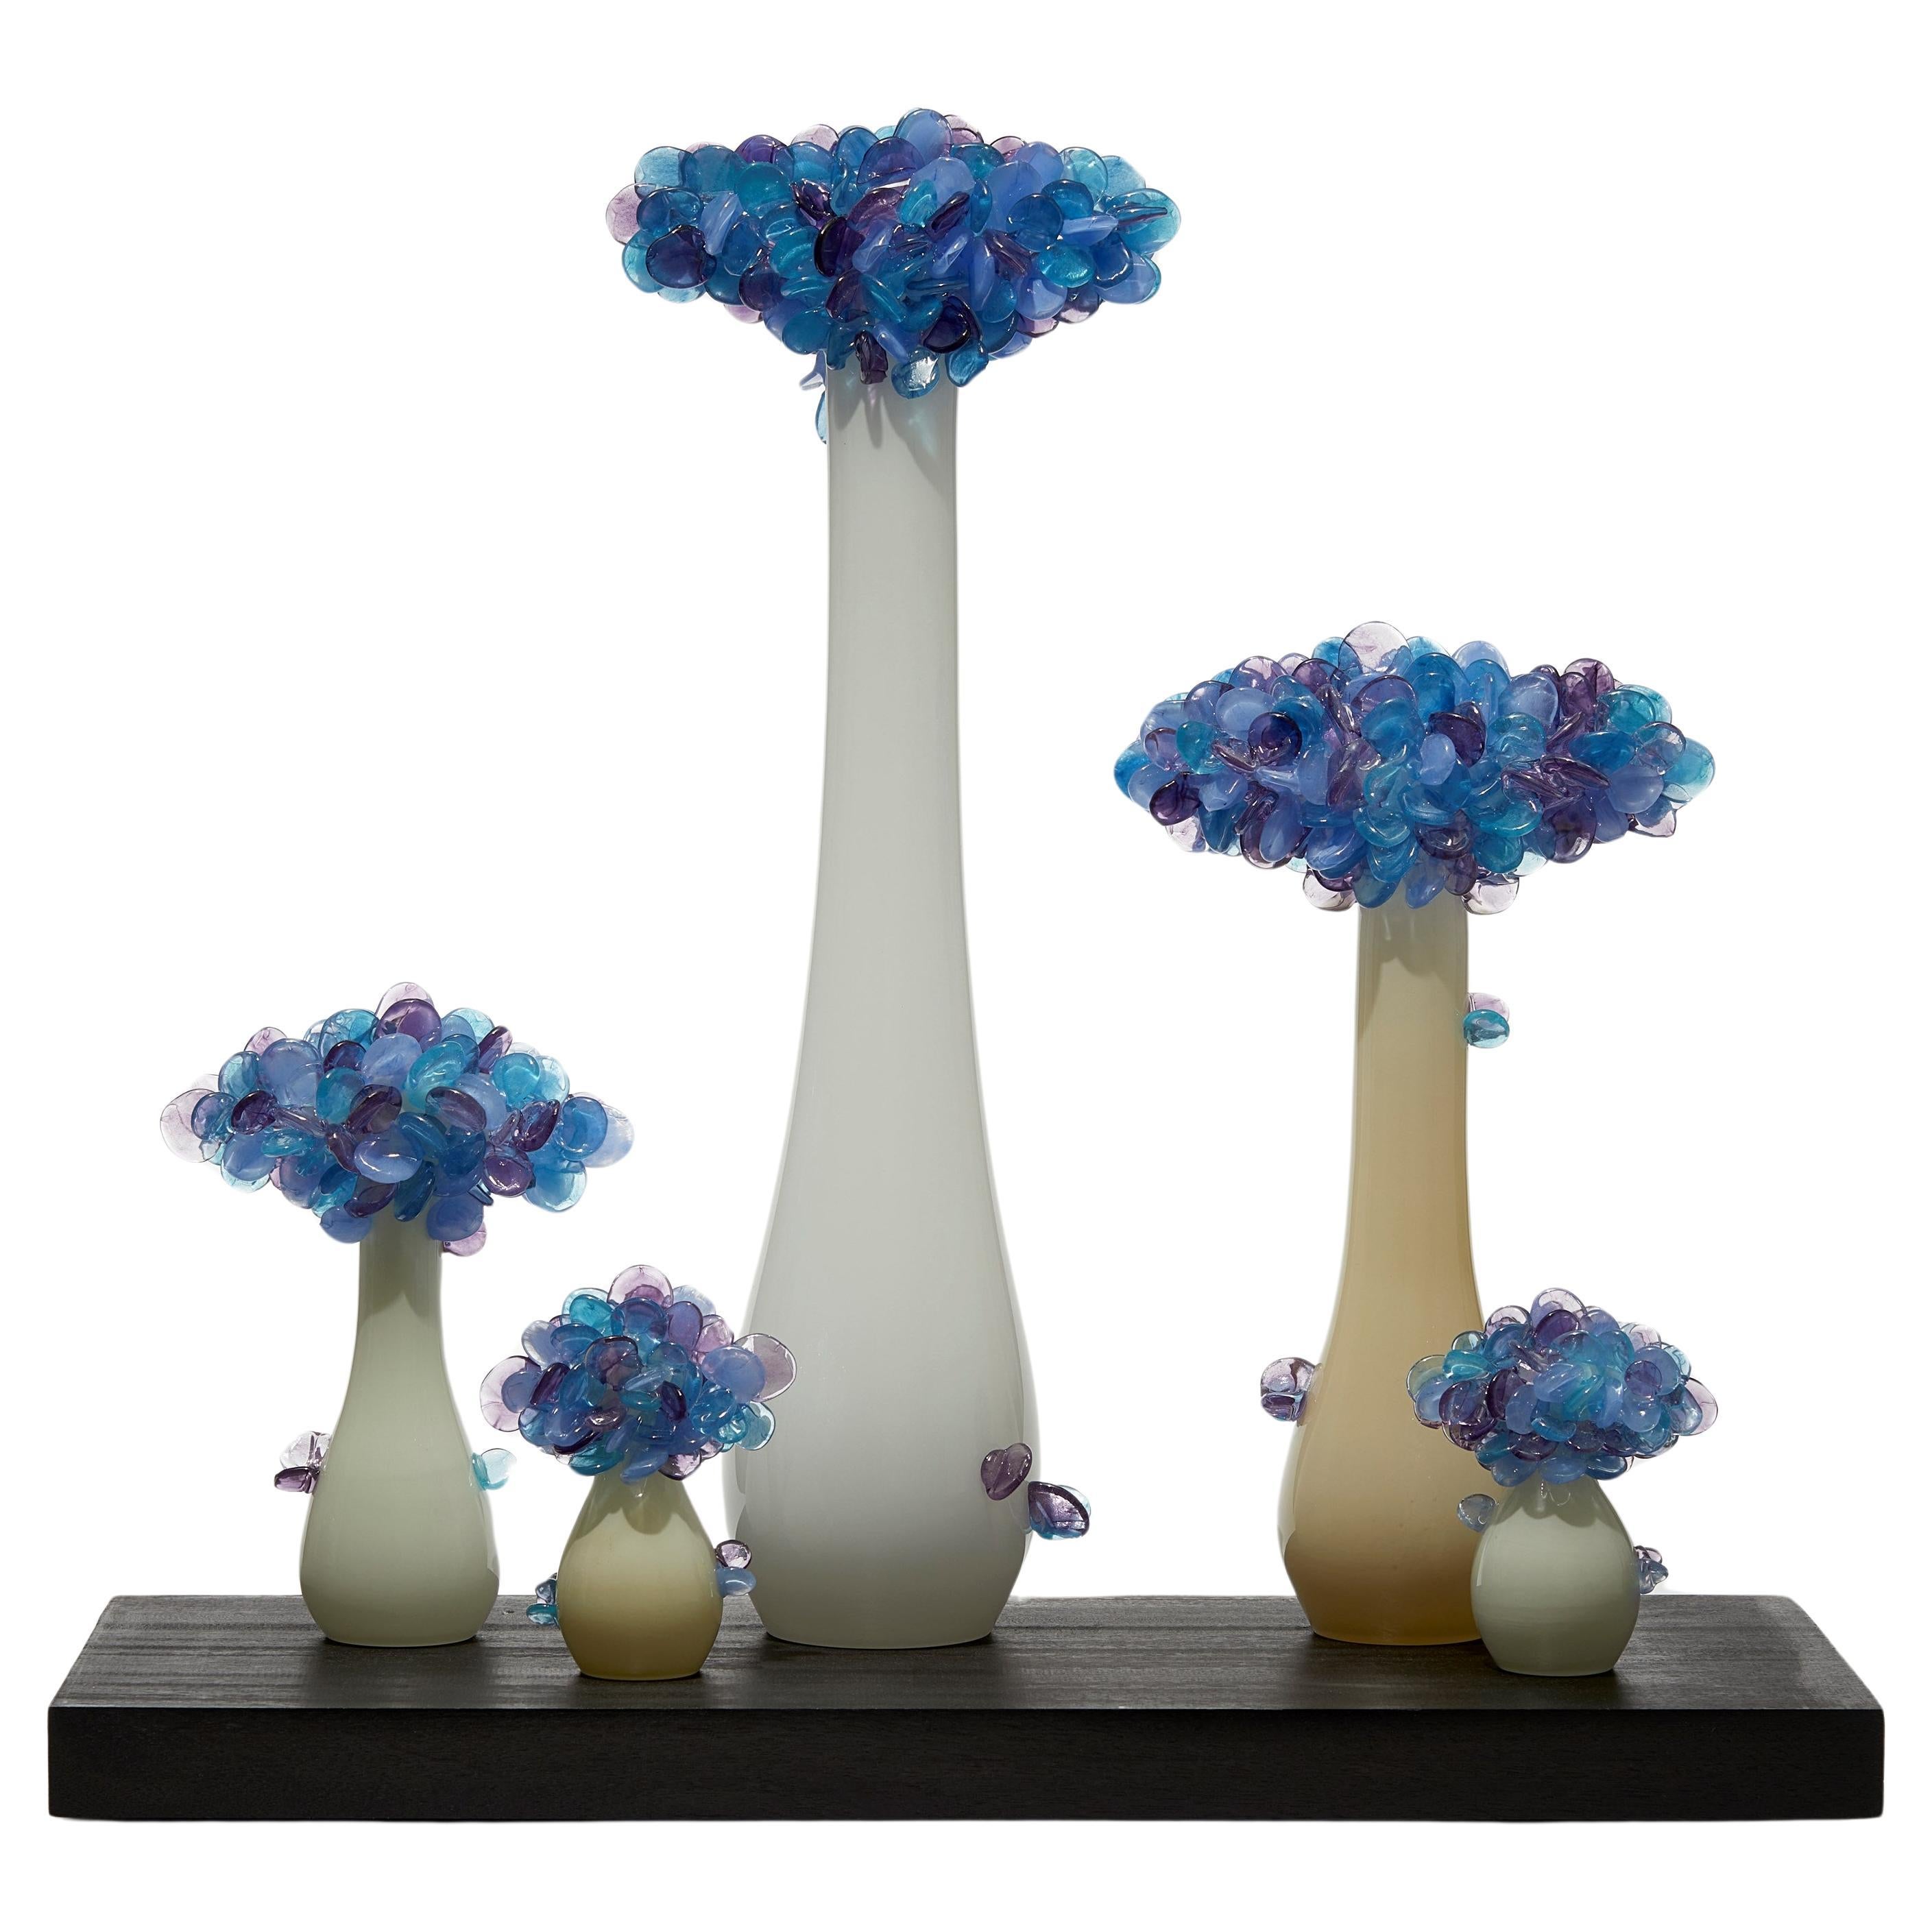 Enchanted Mori Dawn, a tree & bonsai inspired glass artwork by Louis Thompson For Sale